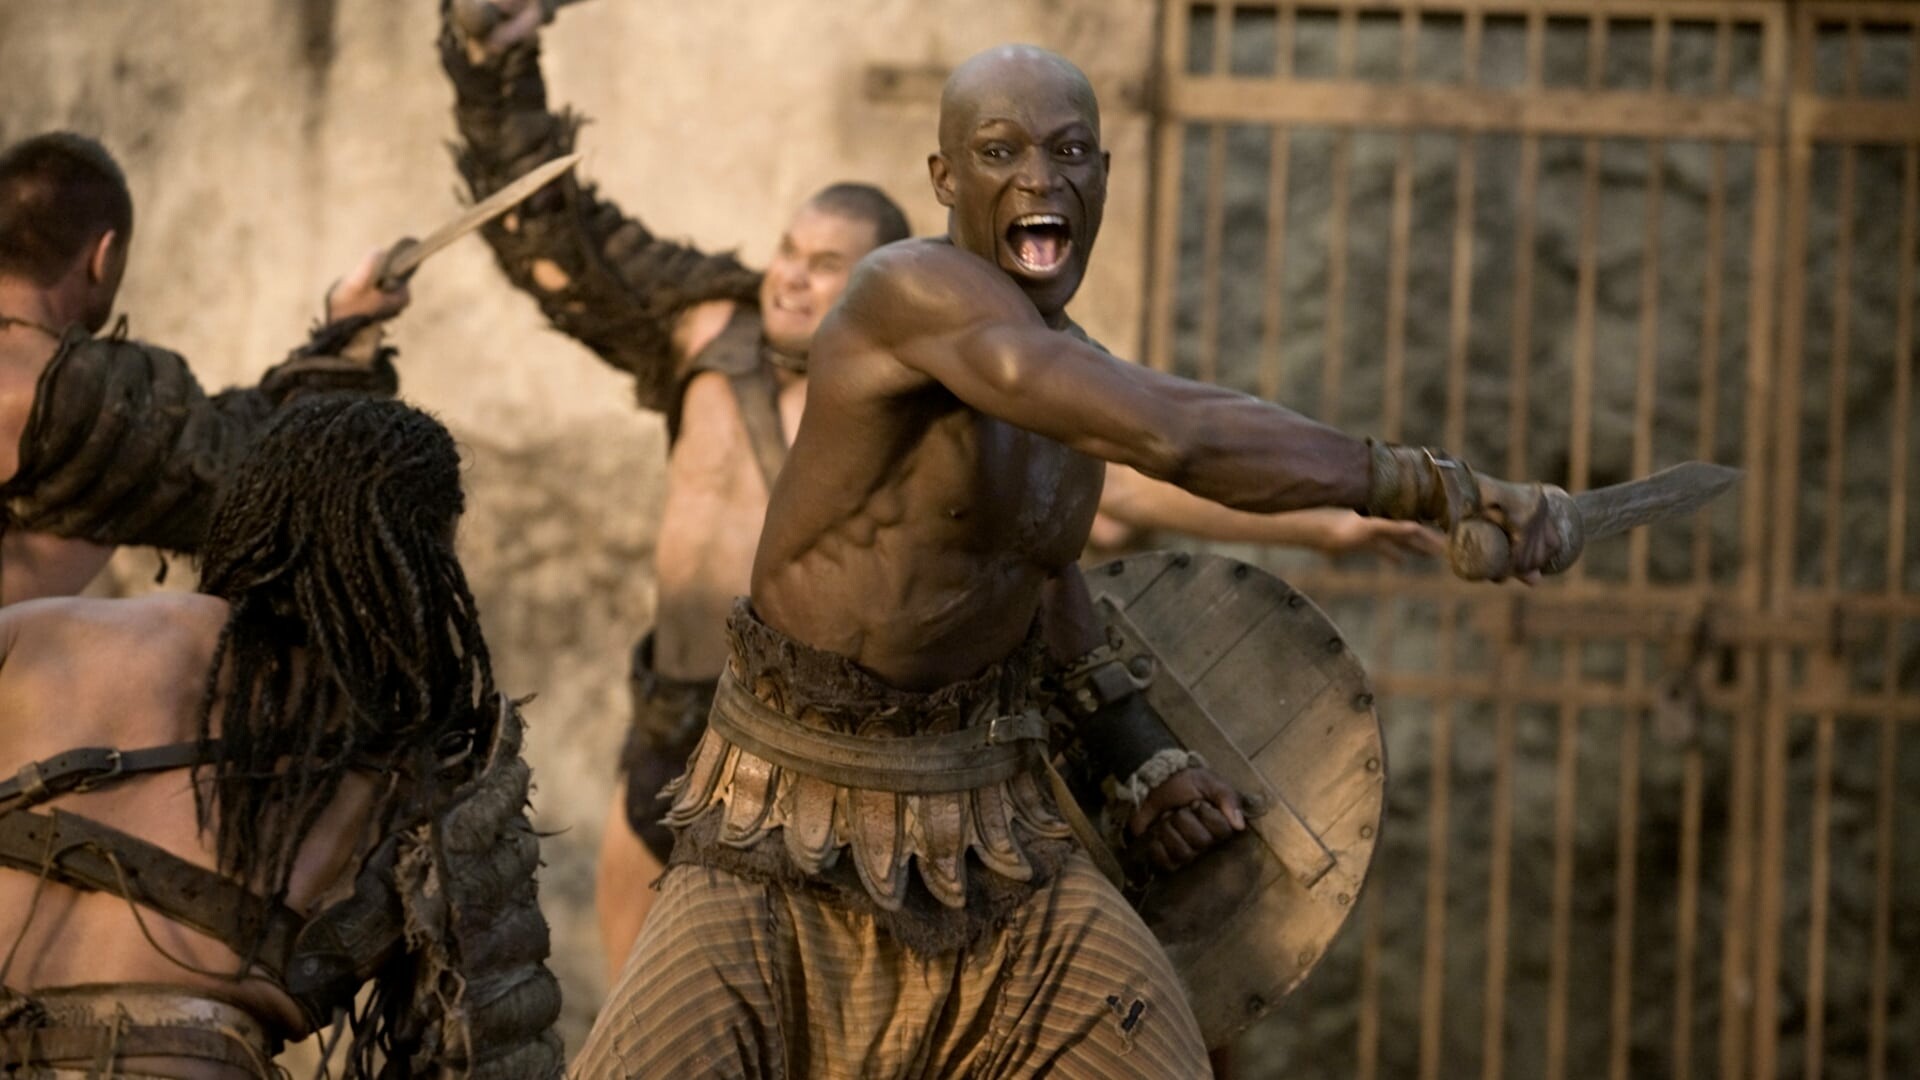 Spartacus: Gods of the Arena: Peter Mensah as Oenomaus, the gladiator trainer in Batiatus' Ludus. 1920x1080 Full HD Background.